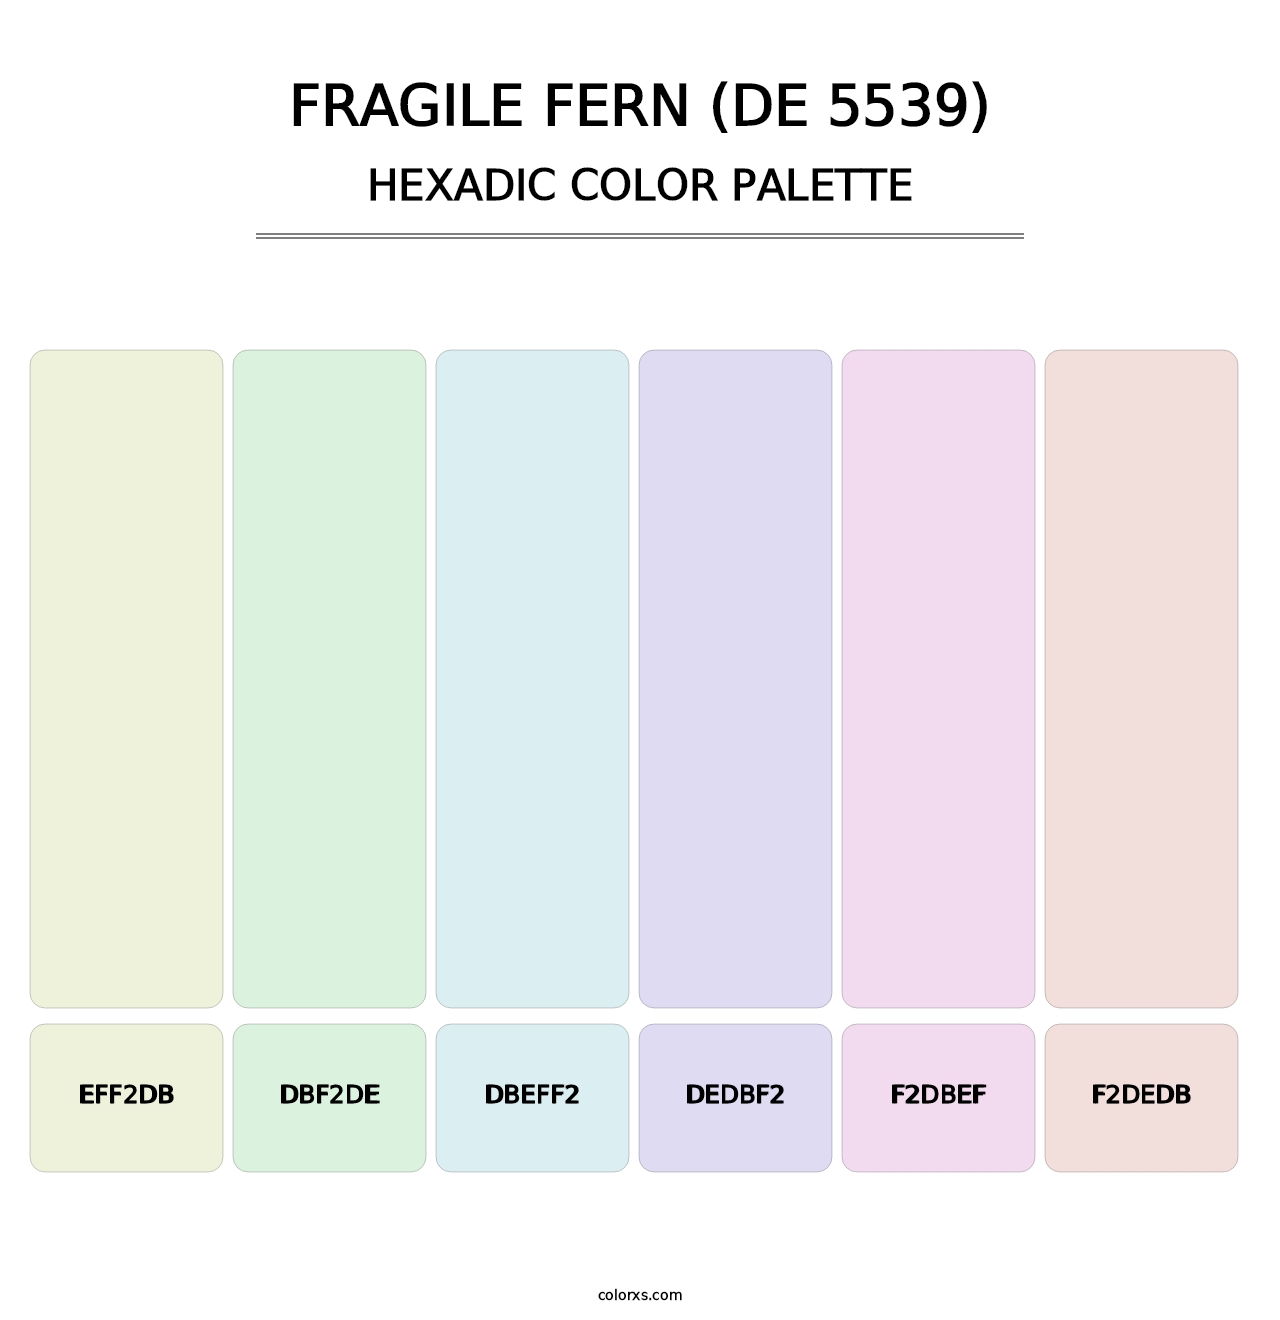 Fragile Fern (DE 5539) - Hexadic Color Palette